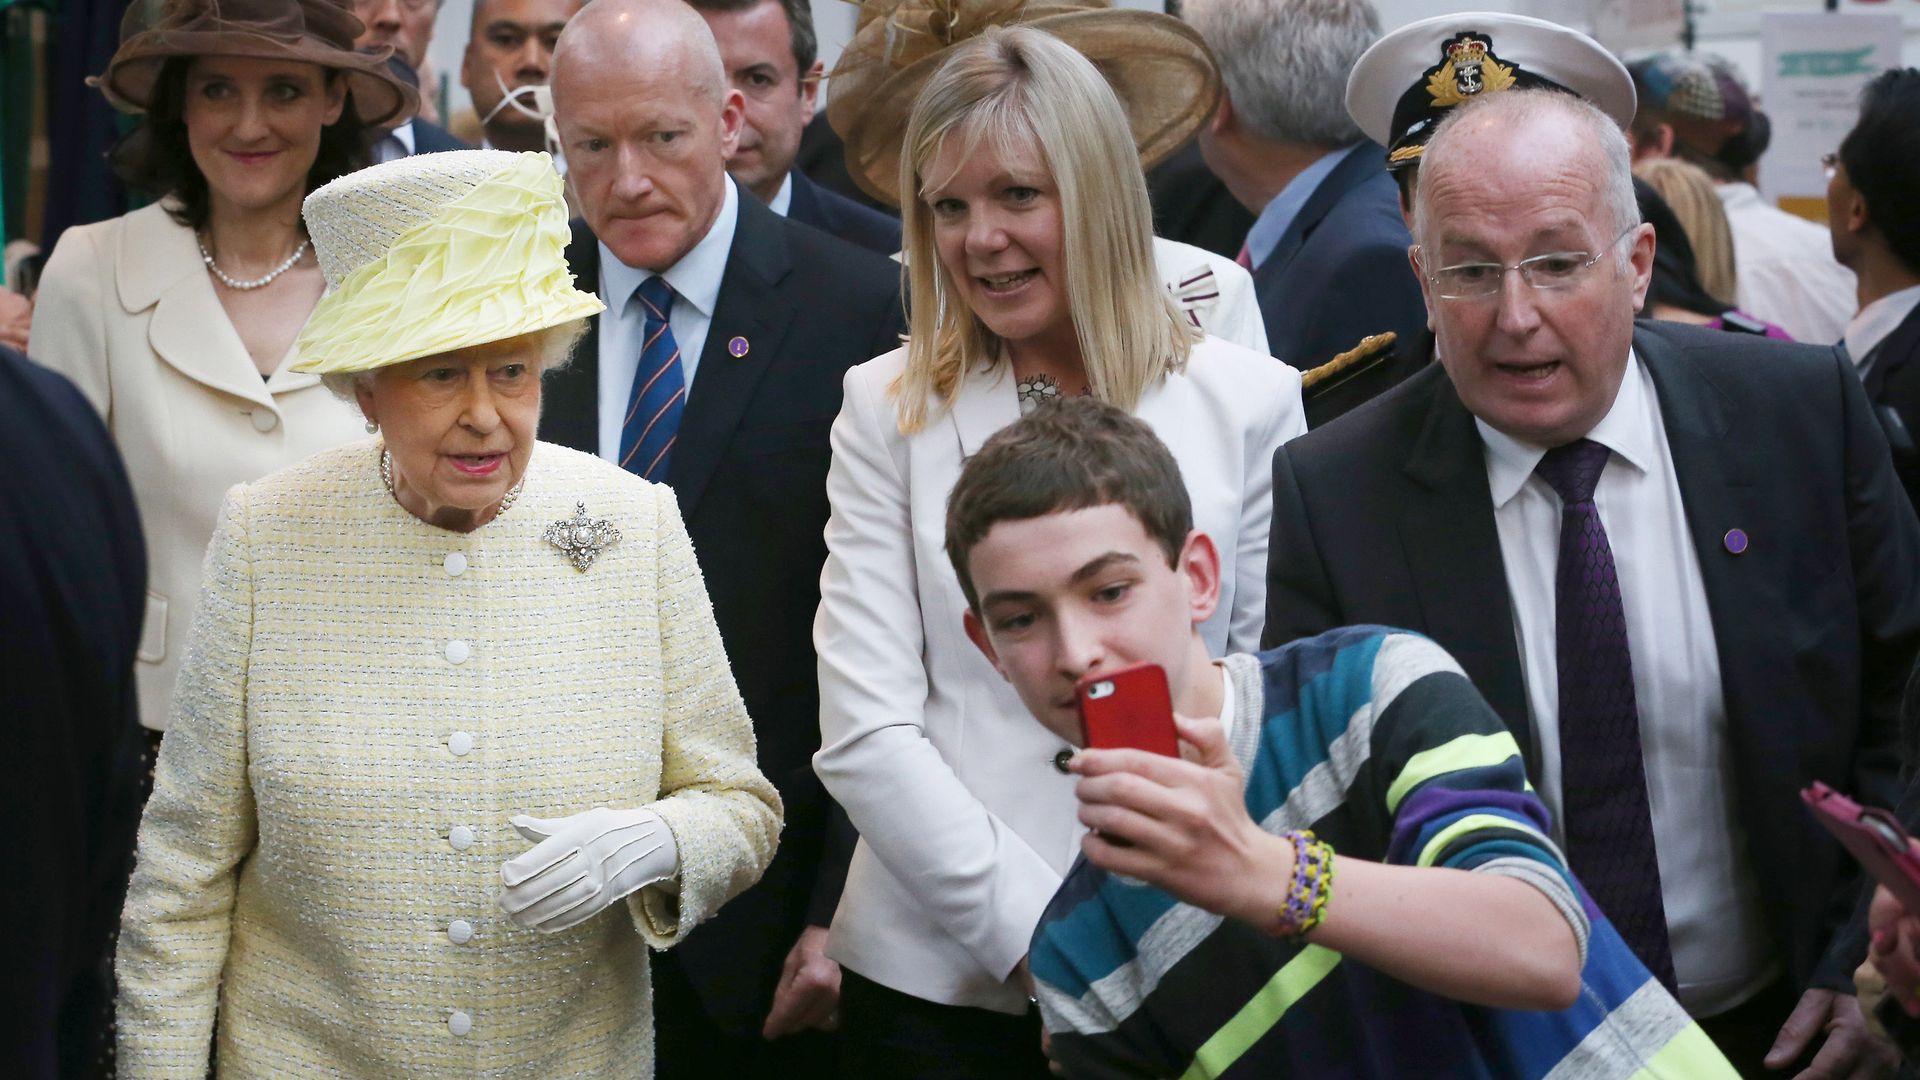 Queen Elizabeth II looking unimpressed as a fan tries to take a selfie with her